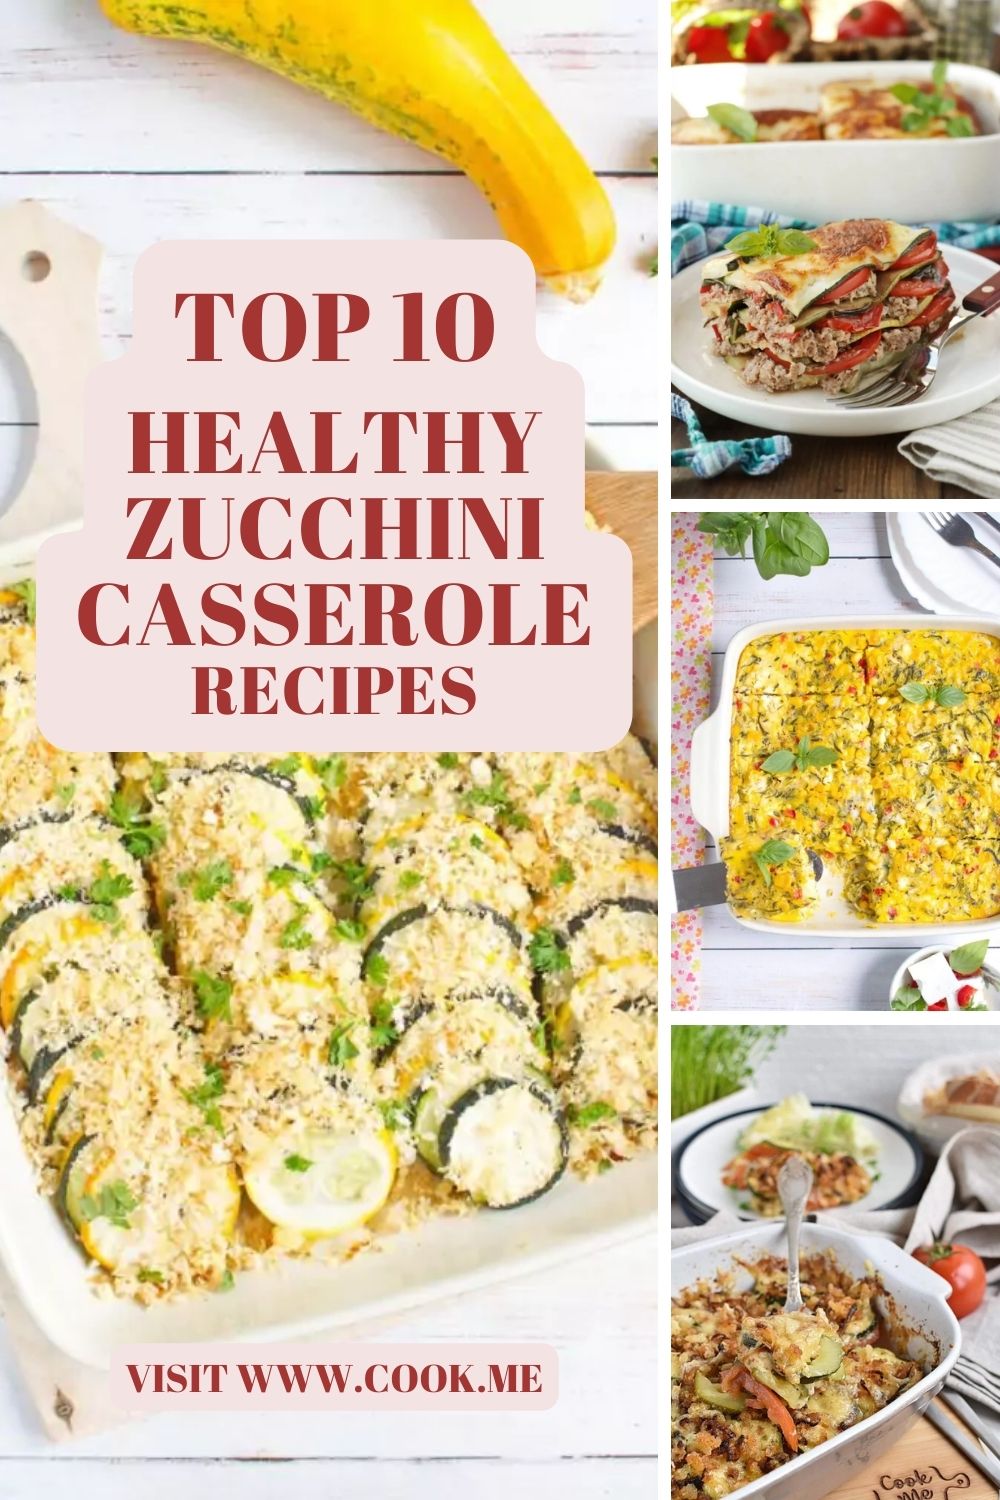 Top 10 Healthy Zucchini Casserole Recipes - Cook.me Recipes